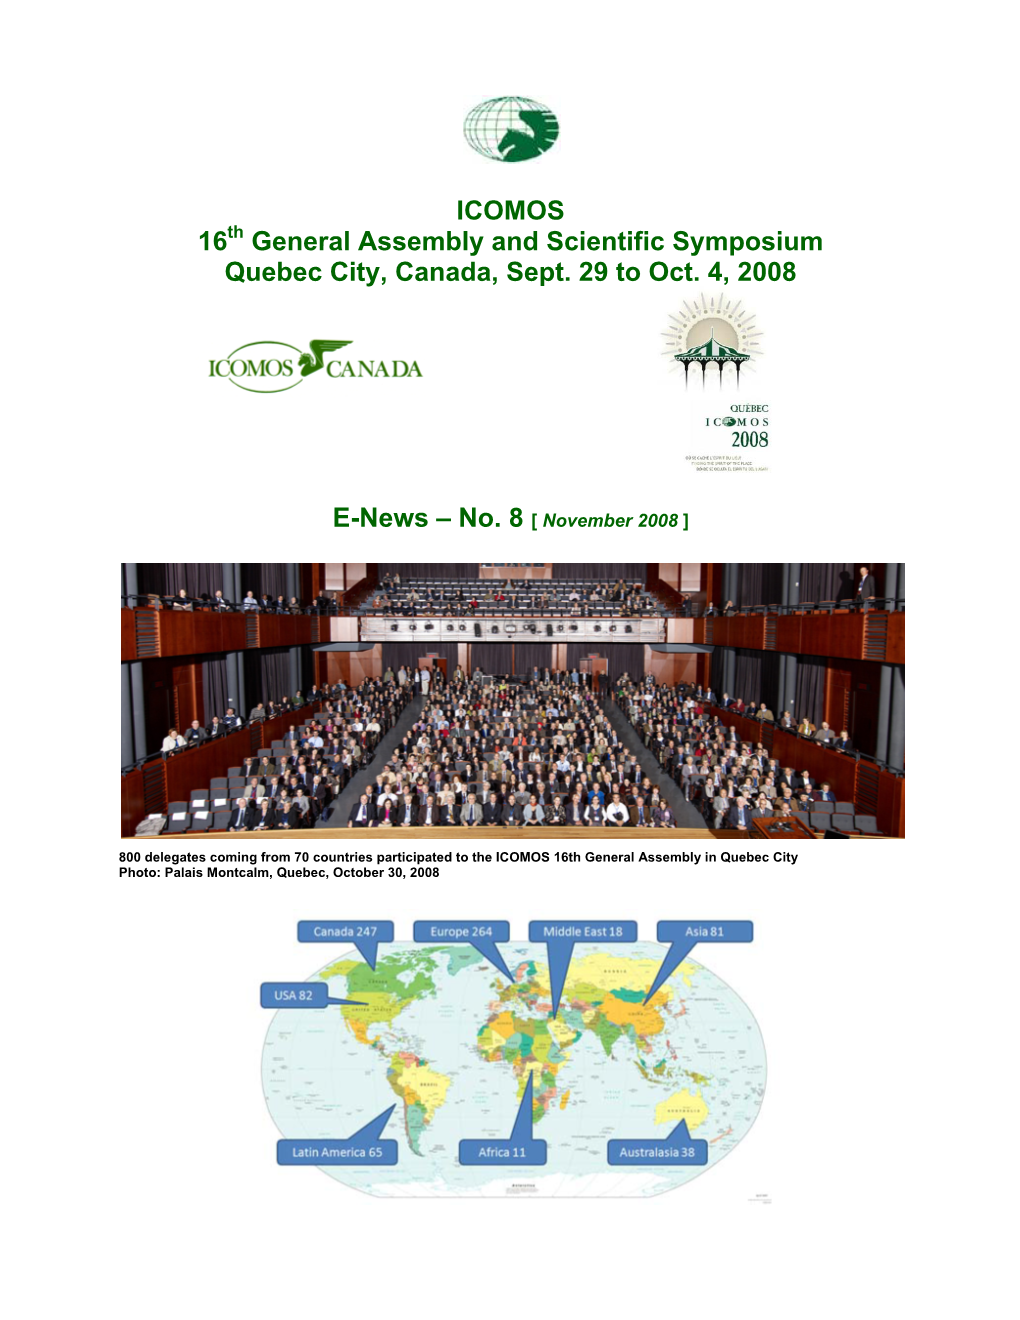 ICOMOS 16 General Assembly and Scientific Symposium Quebec City